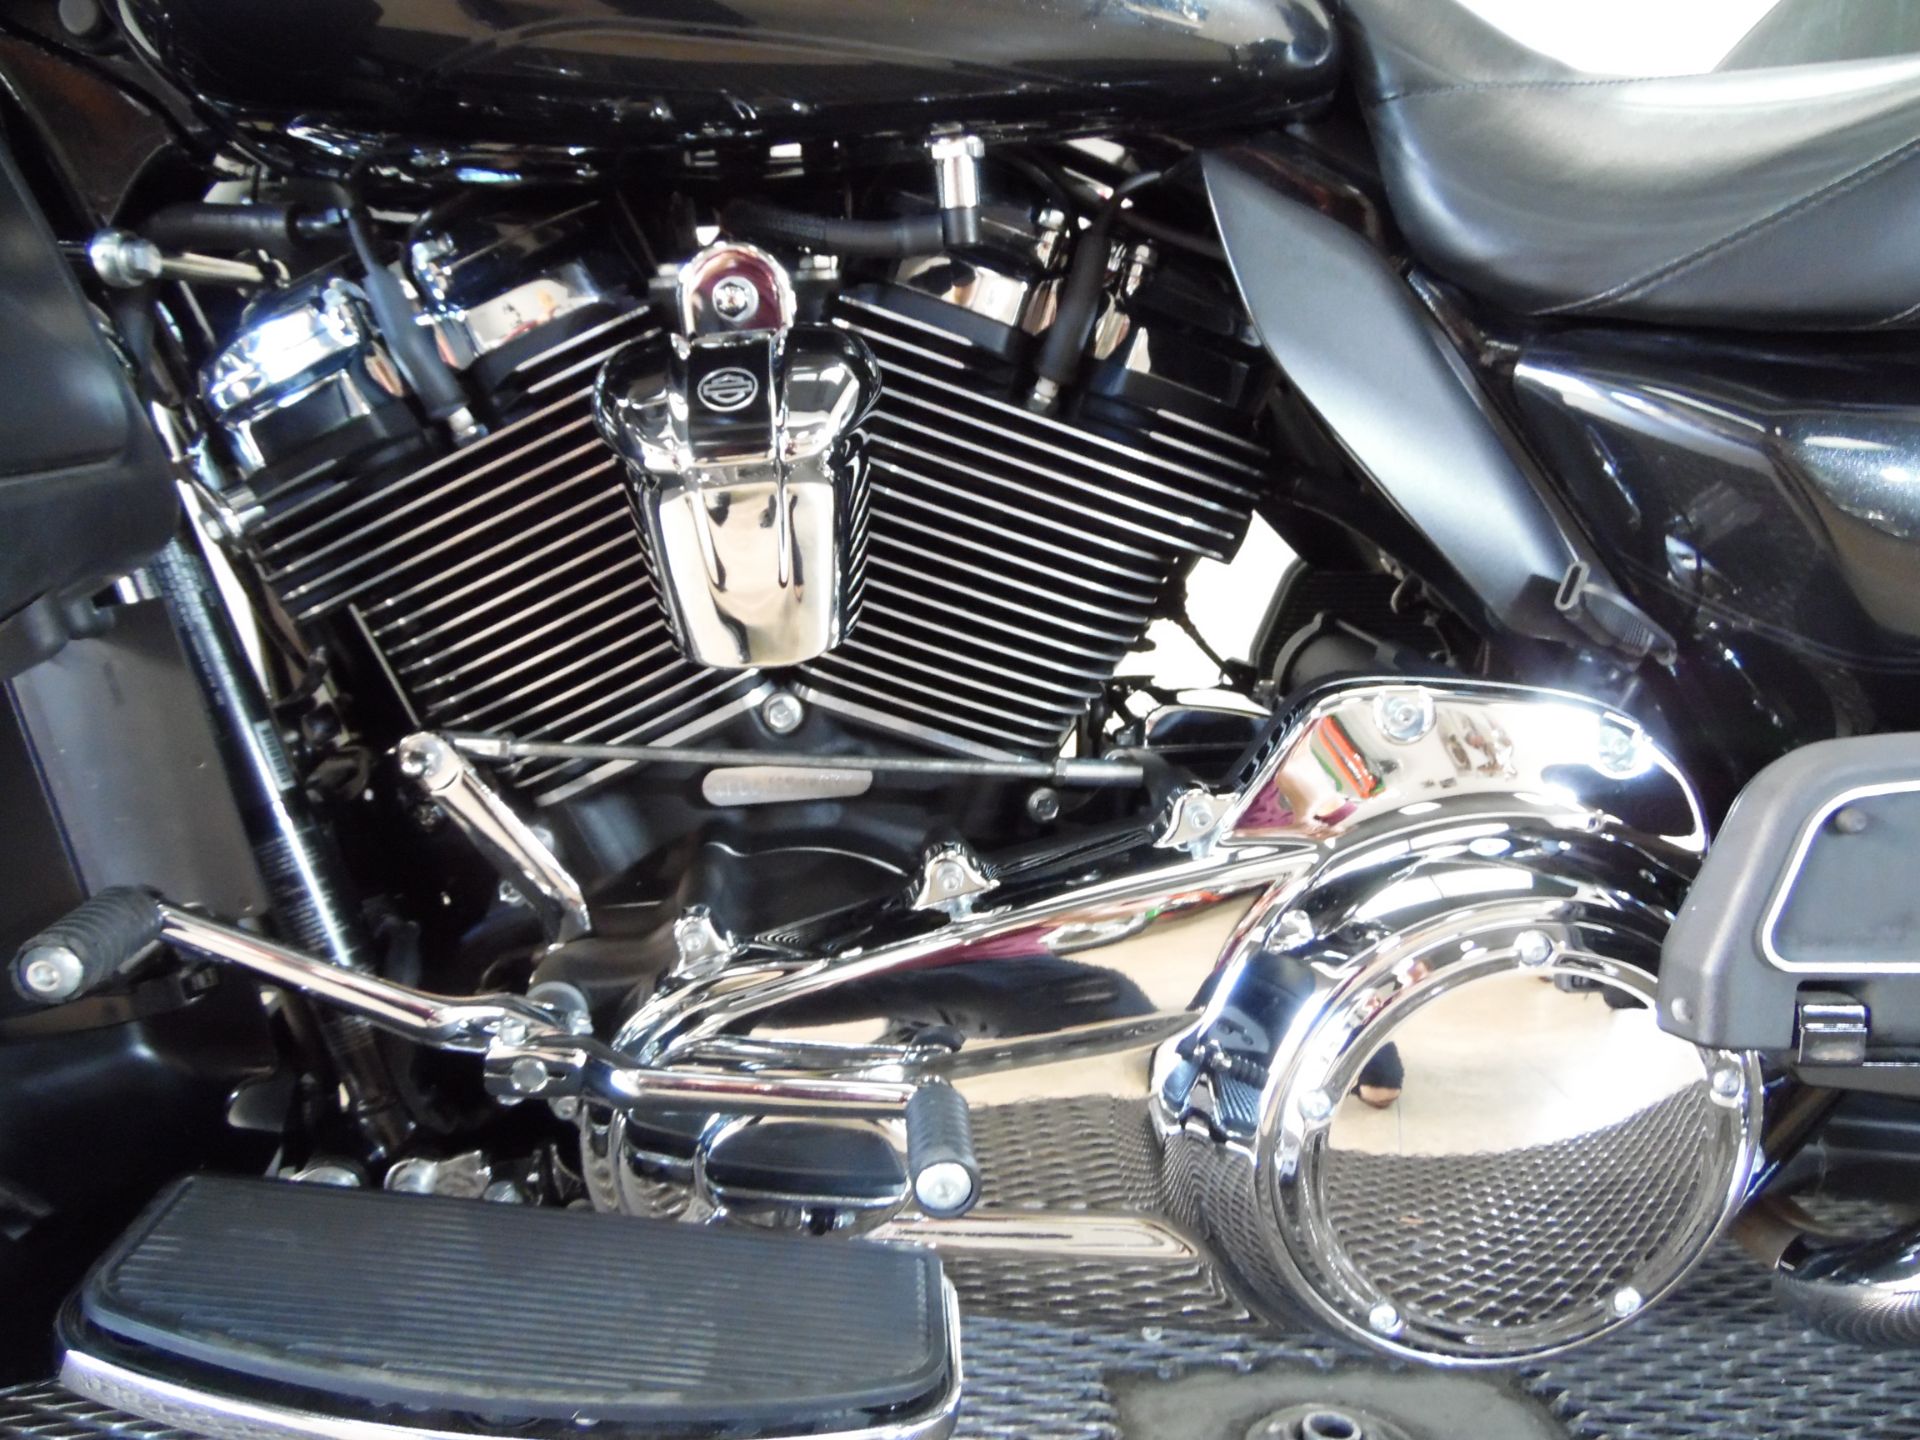 2018 Harley-Davidson Electra Glide® Ultra Classic® in Temecula, California - Photo 12